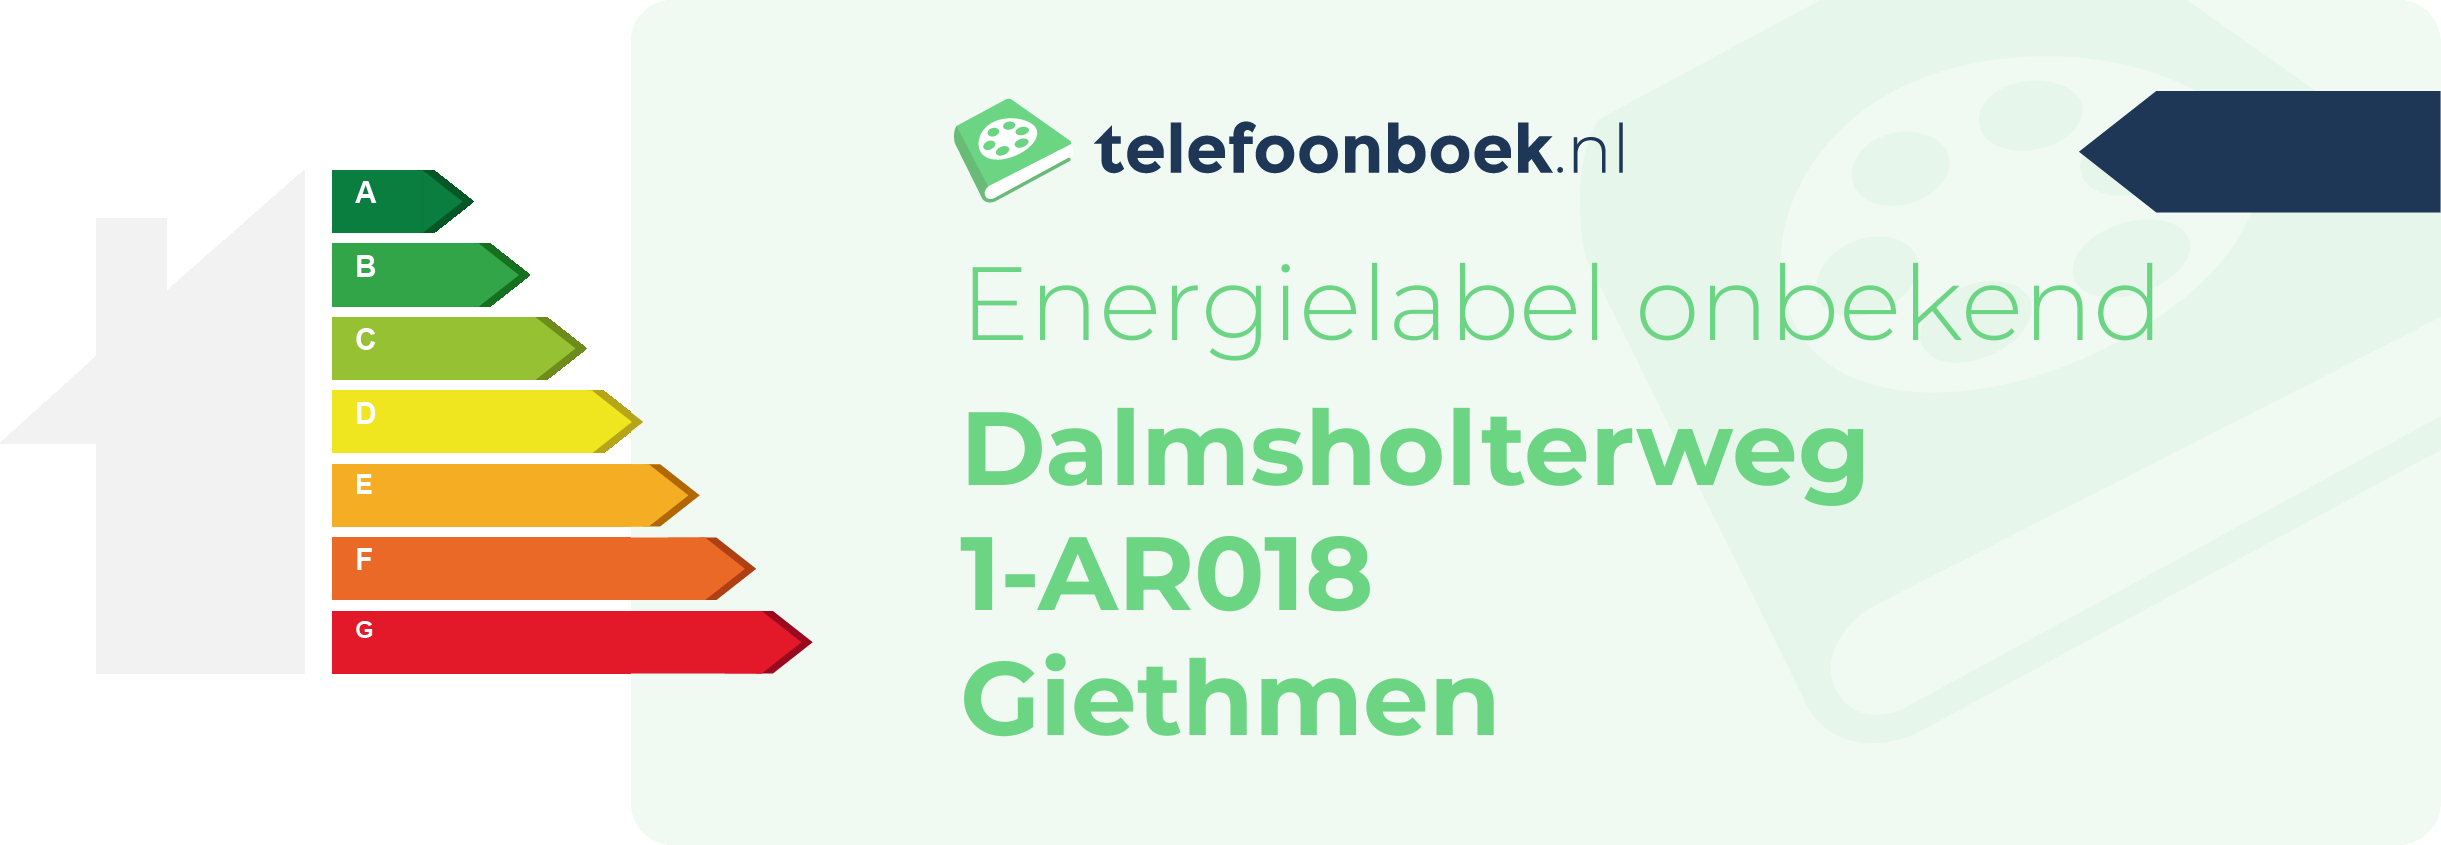 Energielabel Dalmsholterweg 1-AR018 Giethmen